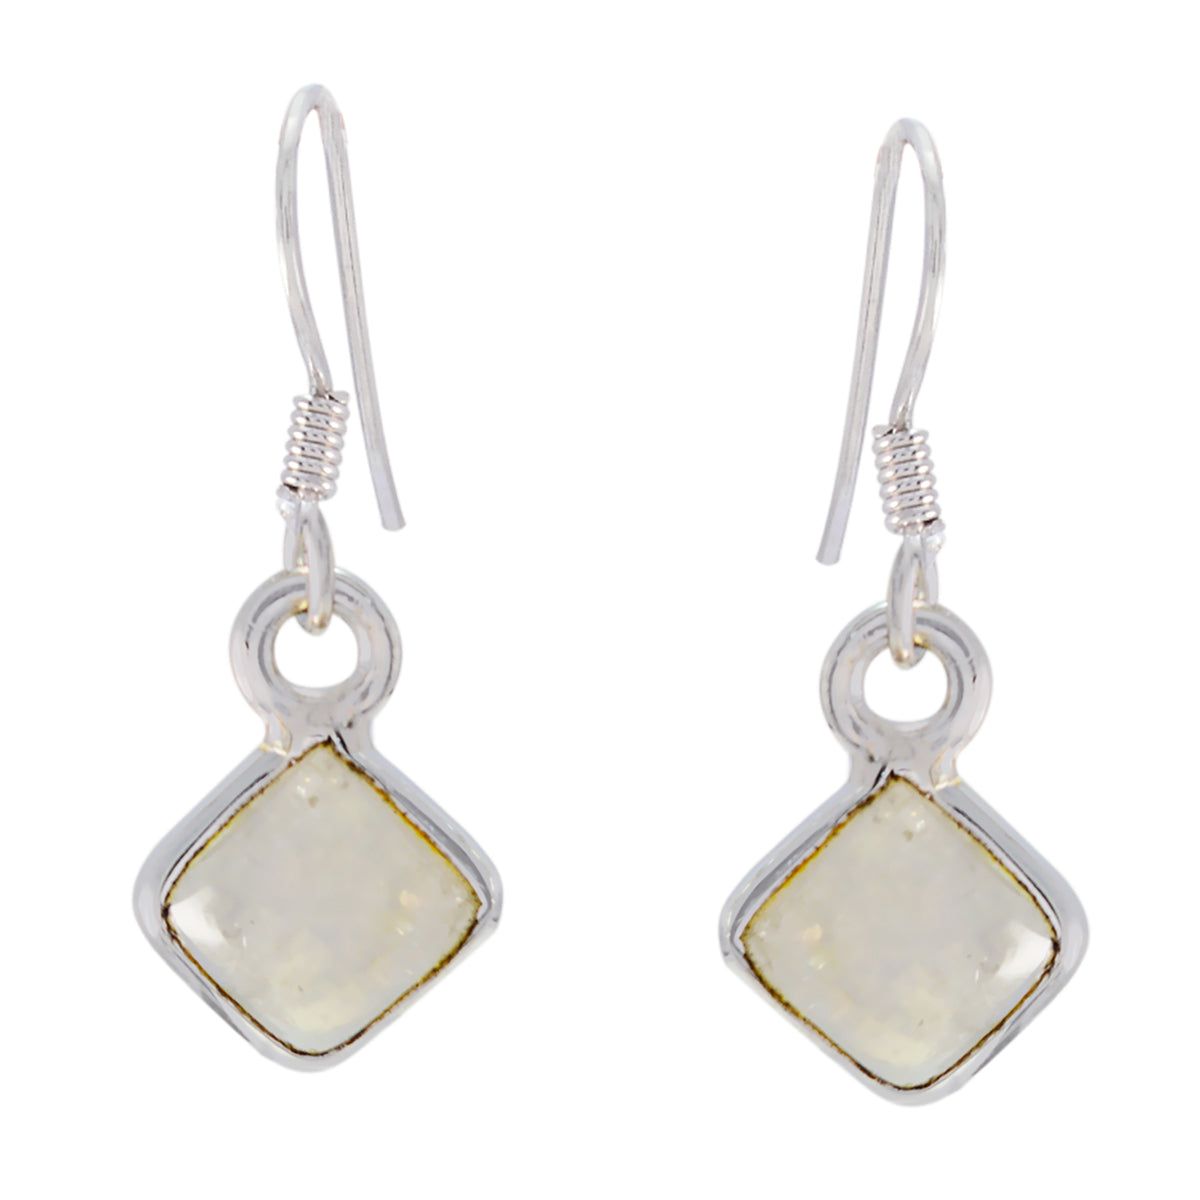 Riyo Good Gemstones square Cabochon White Rainbow Moonstone Silver Earring college student gift